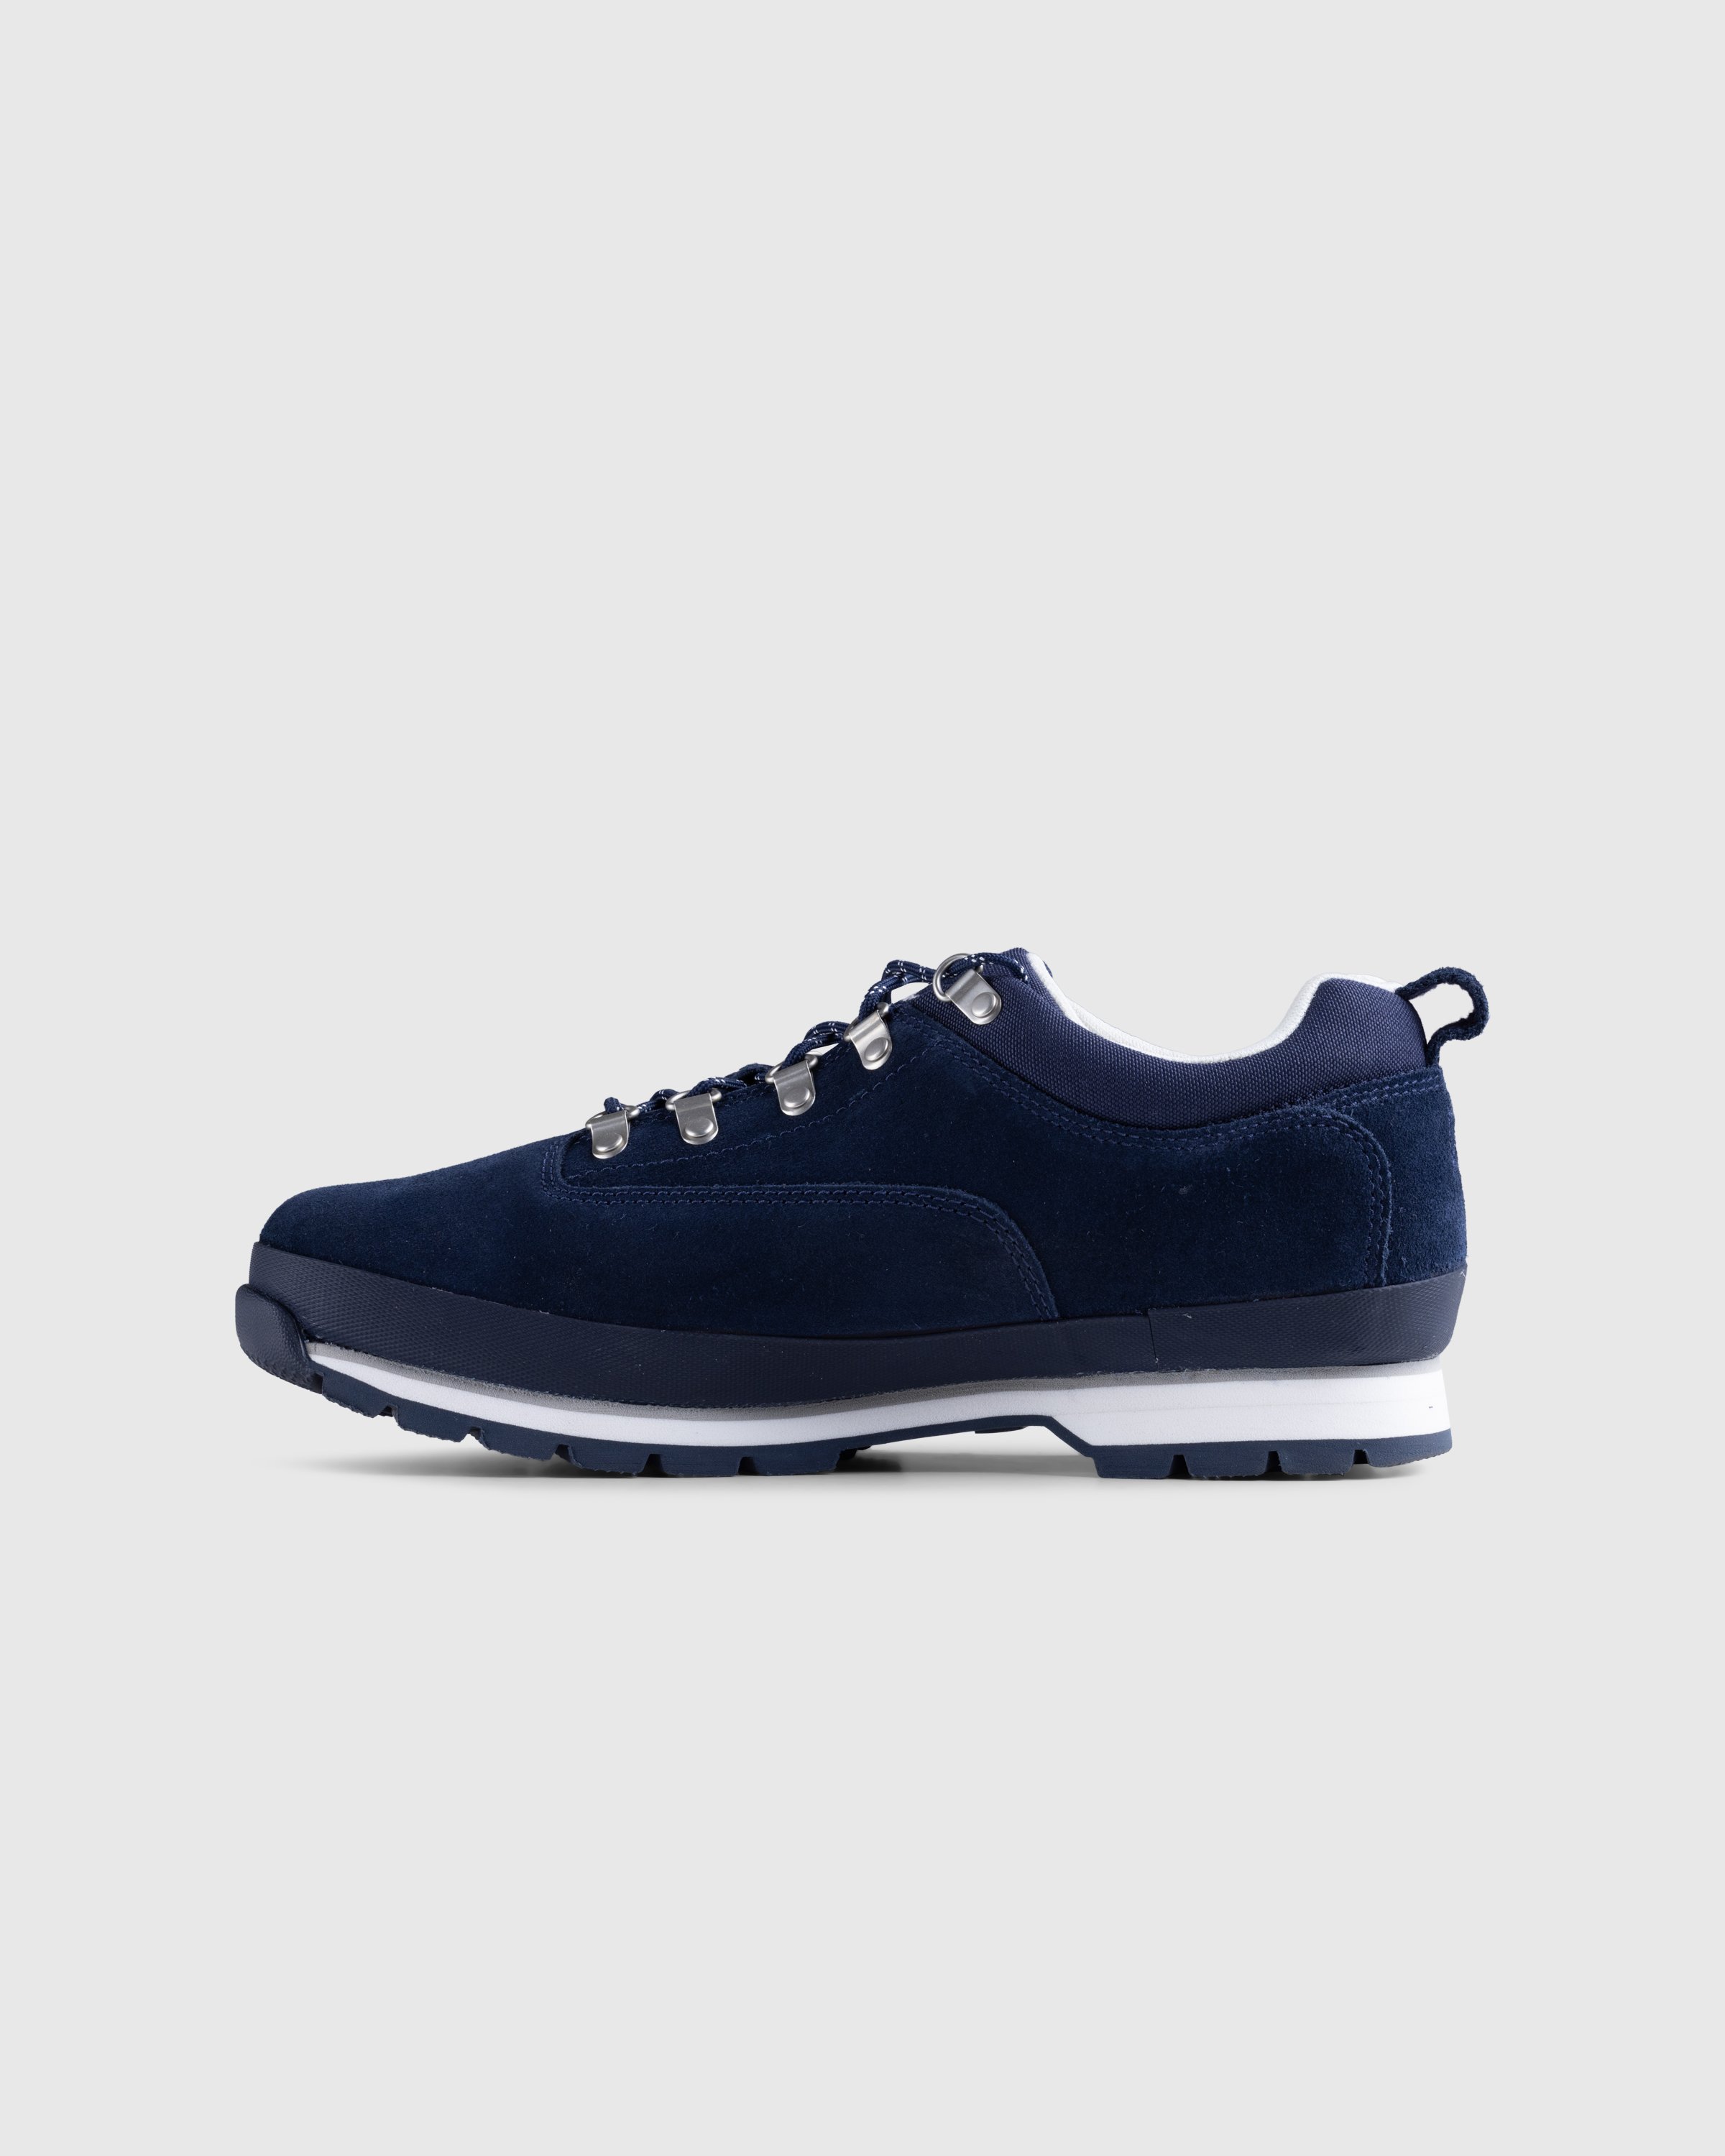 Timberland - Euro Hiker Low Navy - Footwear - Blue - Image 2